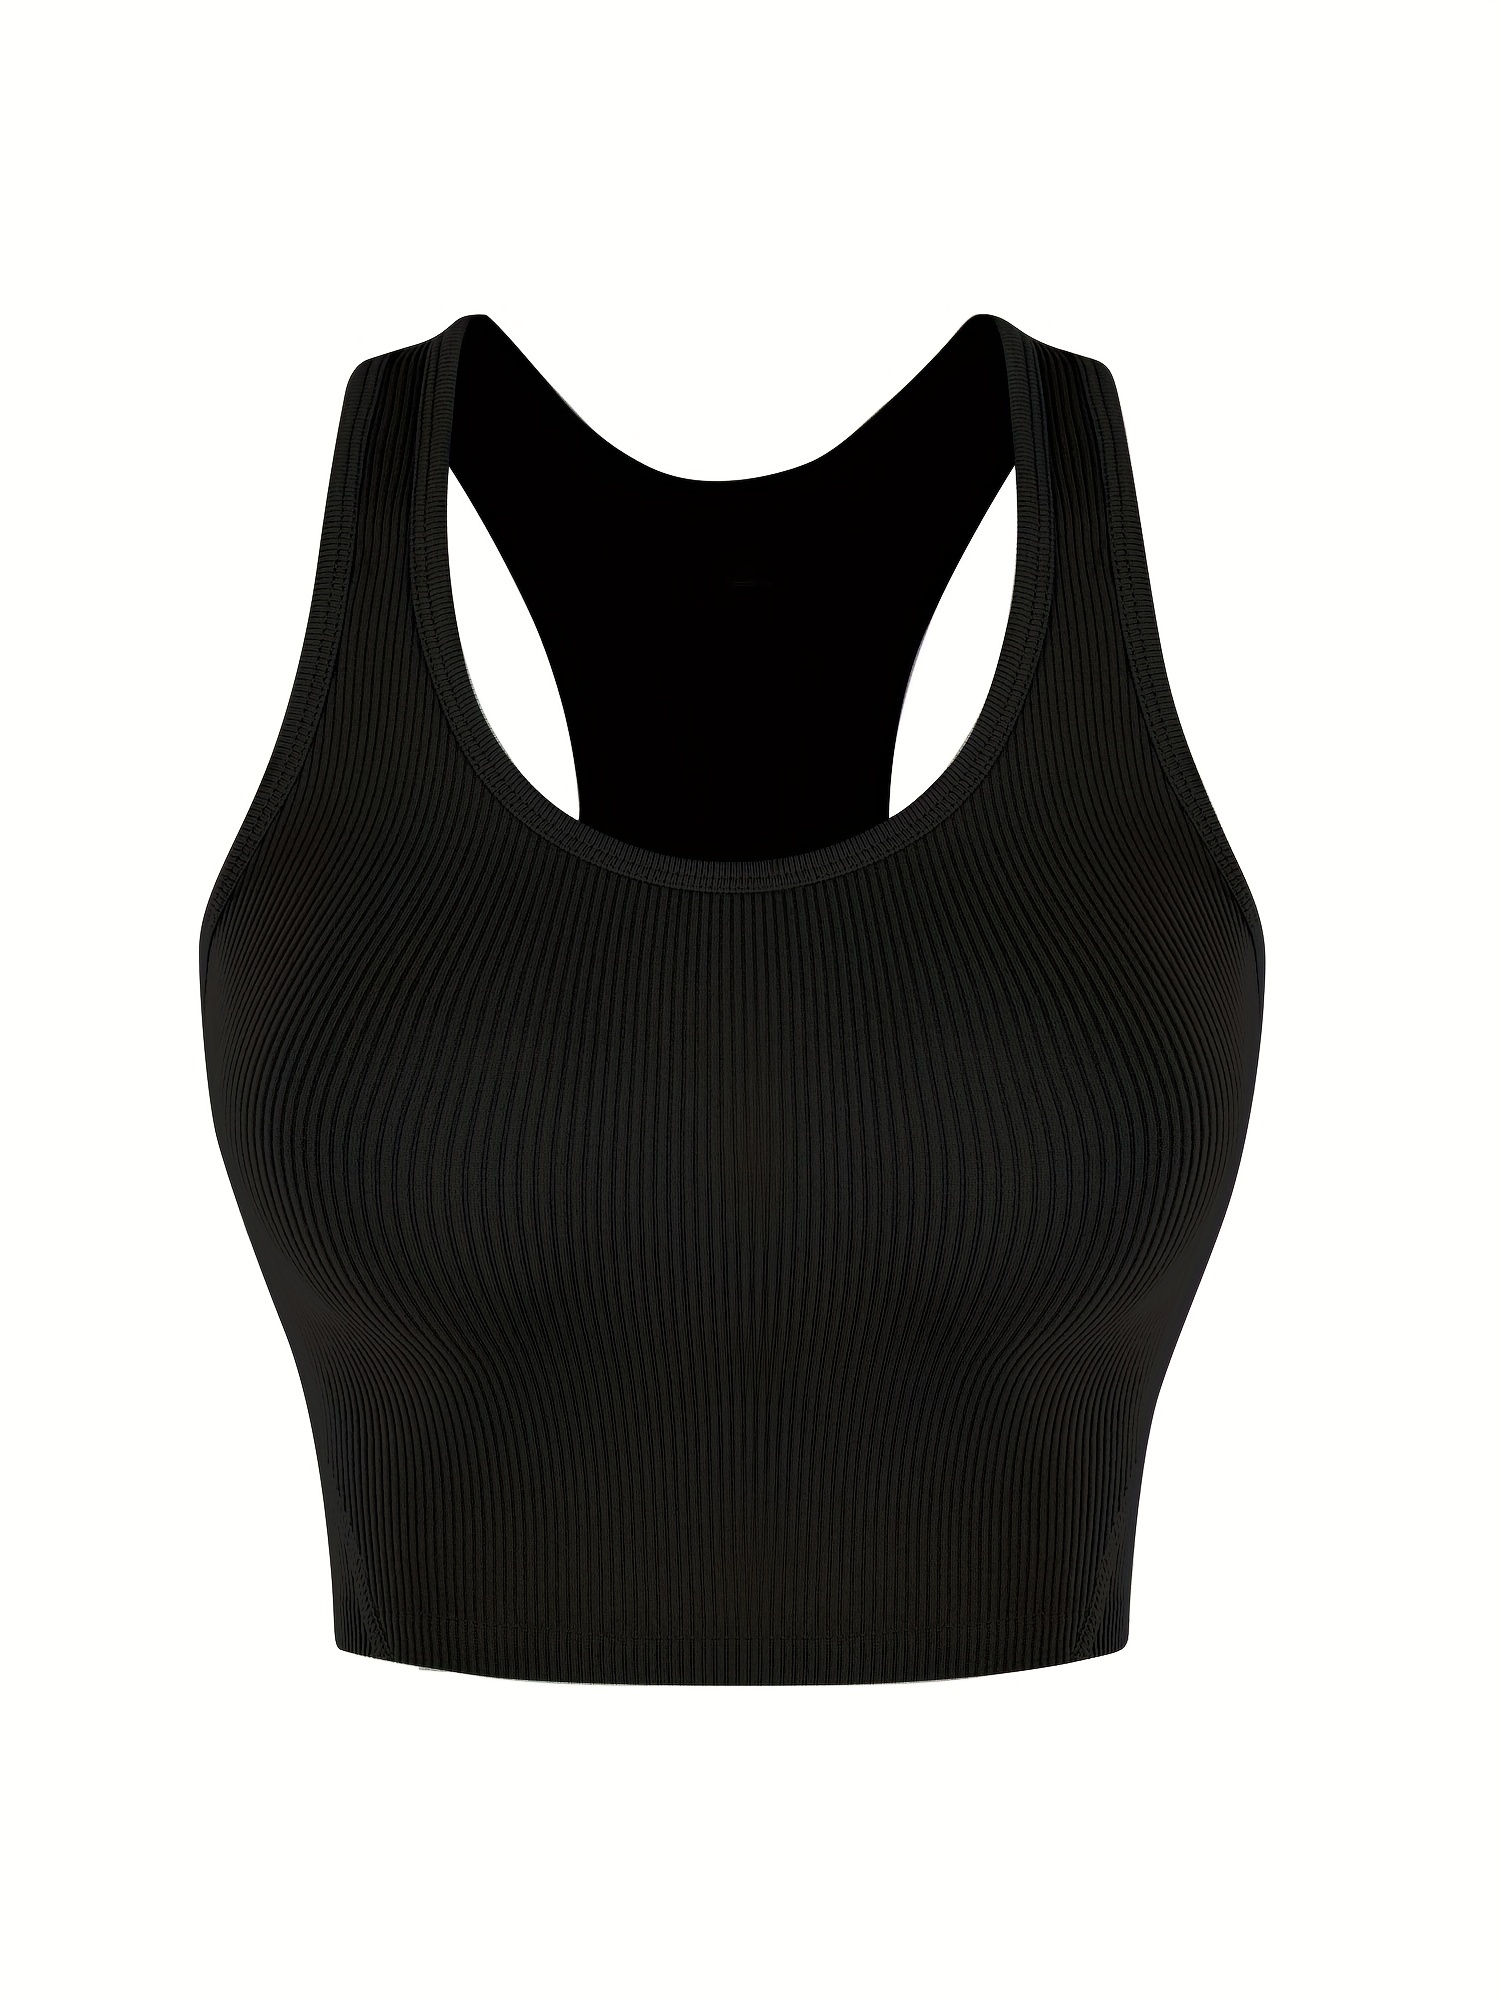 Women Sleeveless Yoga Tank Tops Built-in Bra Padded Camisole Basic  Undershirt футболки и топы Цвет: Black Classic Style; Размер: S купить  недорого от 25 руб. в интернет-магазине